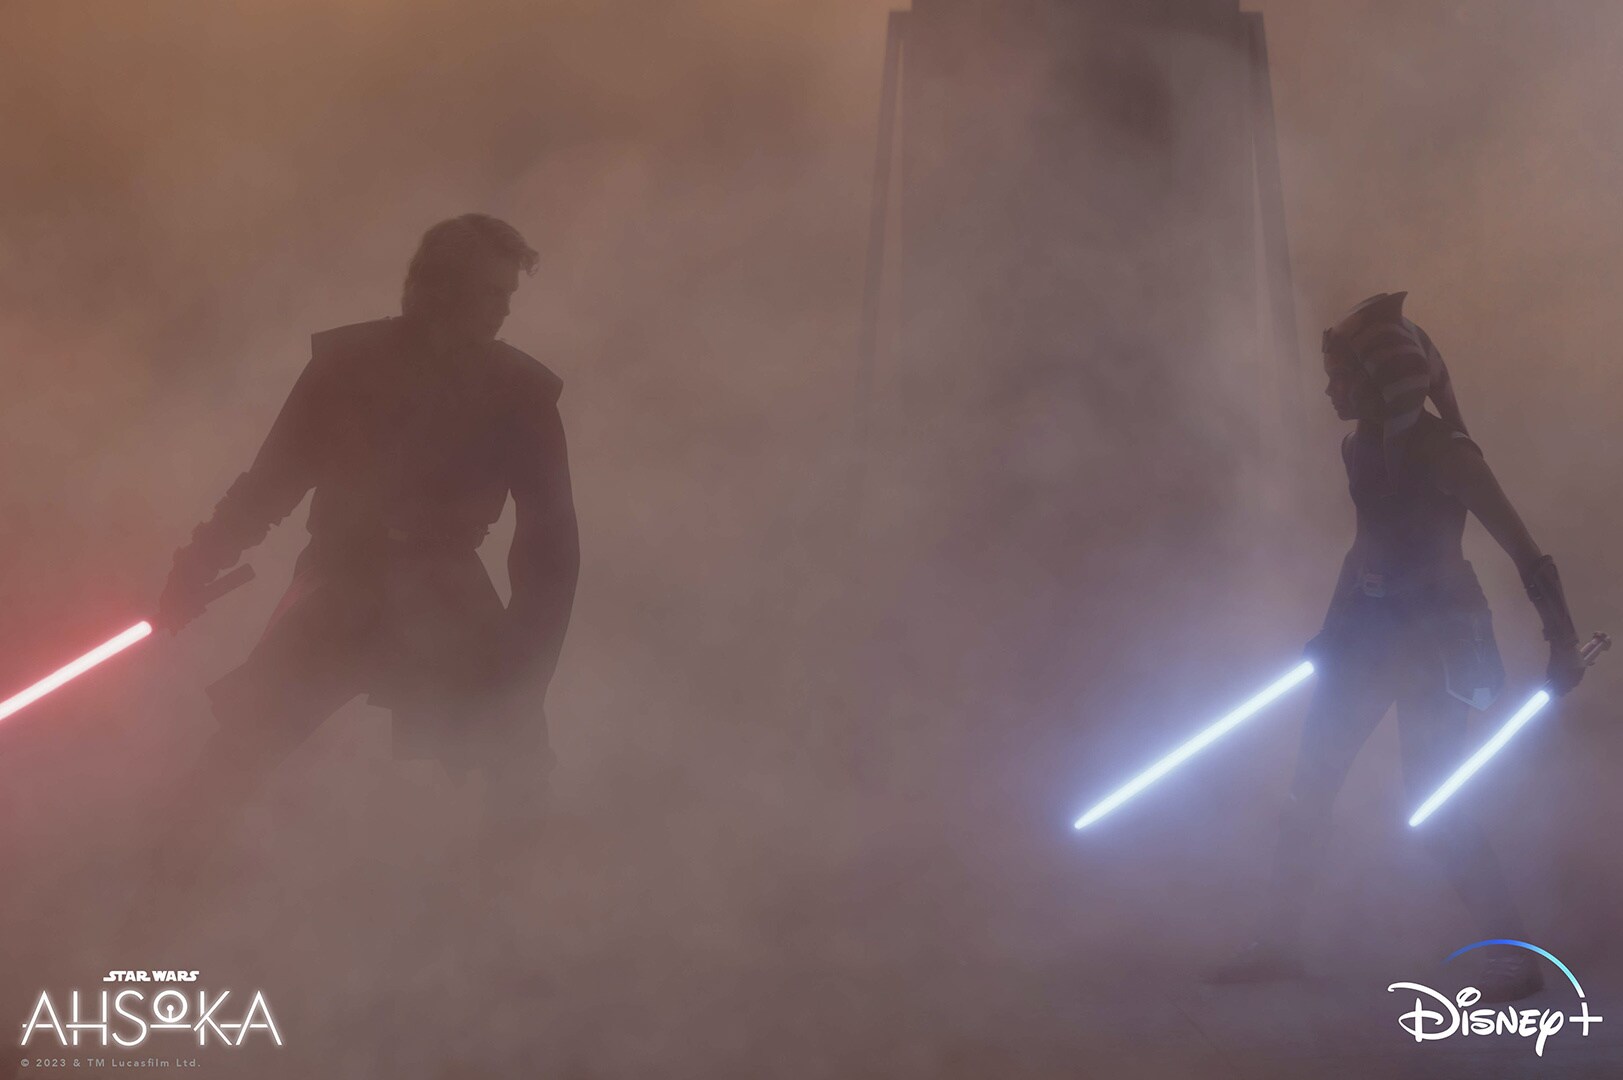 Ahsoka and Anakin in battle